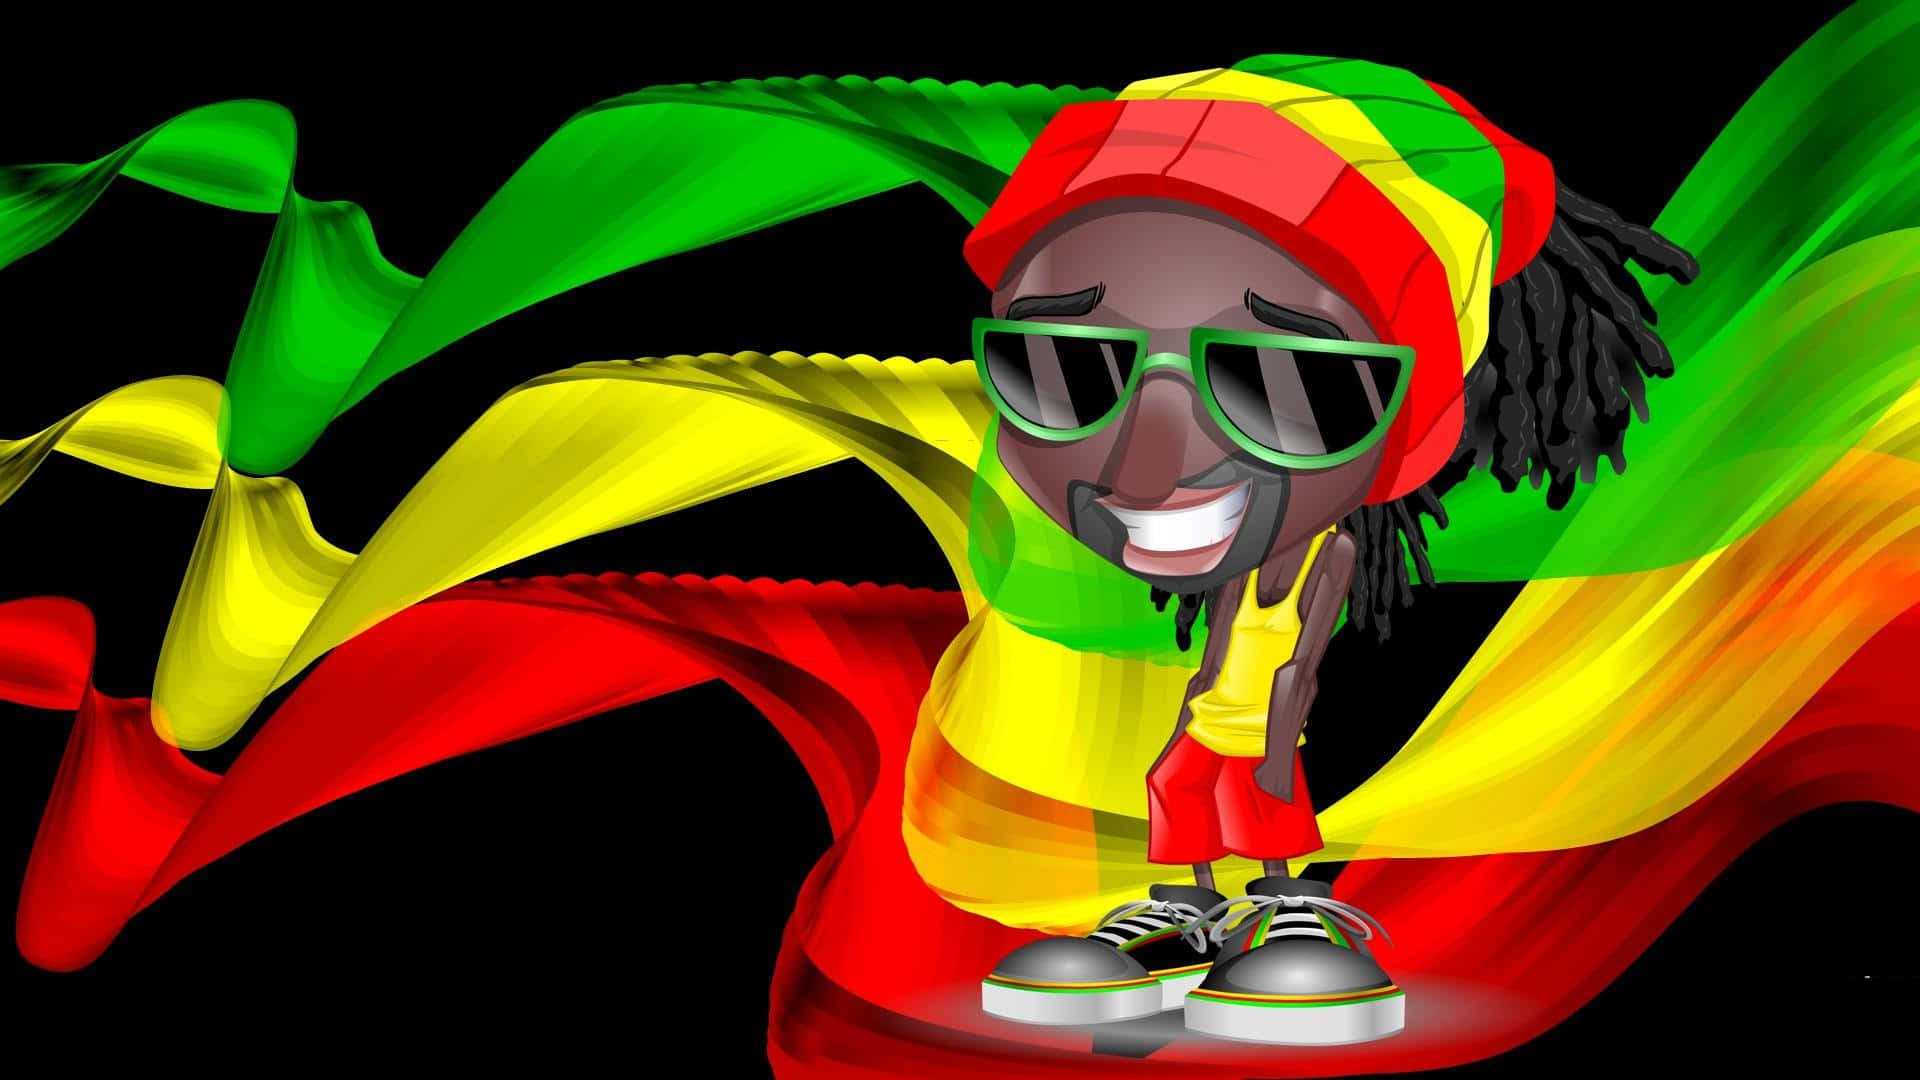 Njutav De Olika Reggae-vibbarna